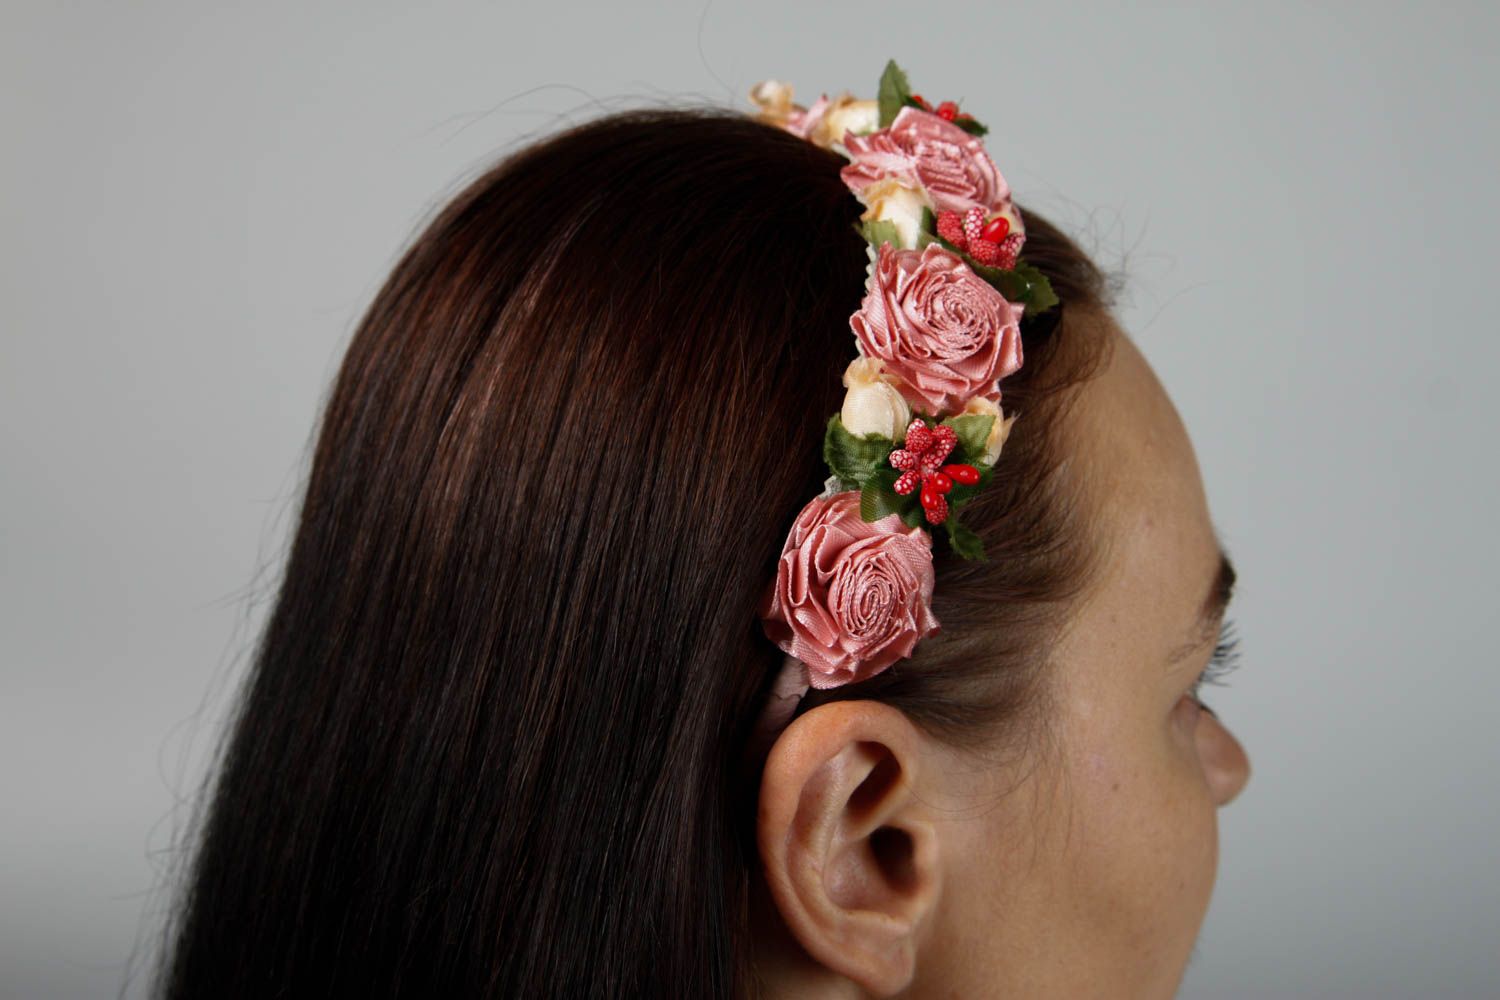 Stylish handmade flower headband leather goods hair bands accessories for girls photo 2